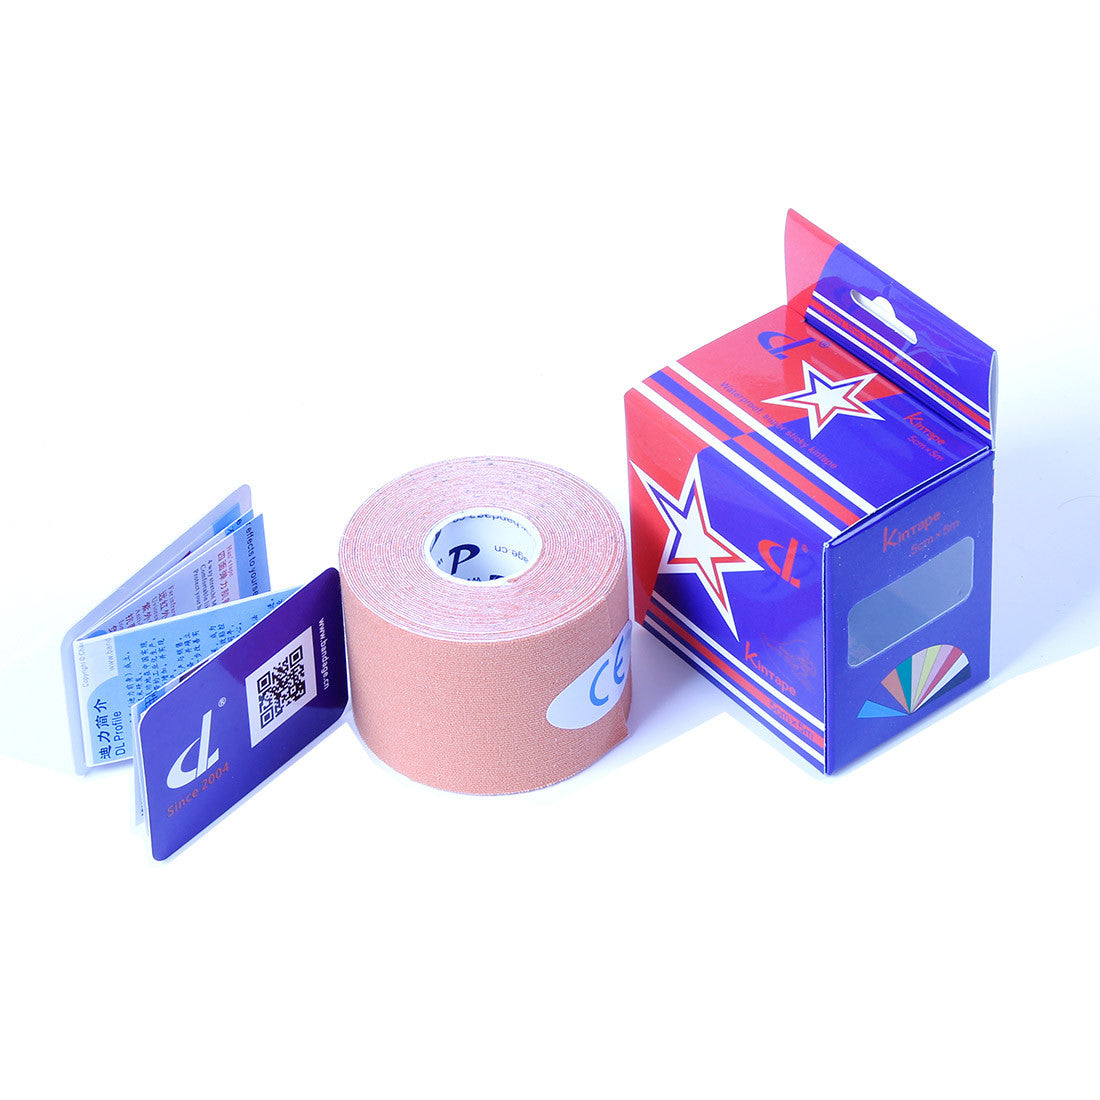 K-Tape 5cmx5m blue roll buy online